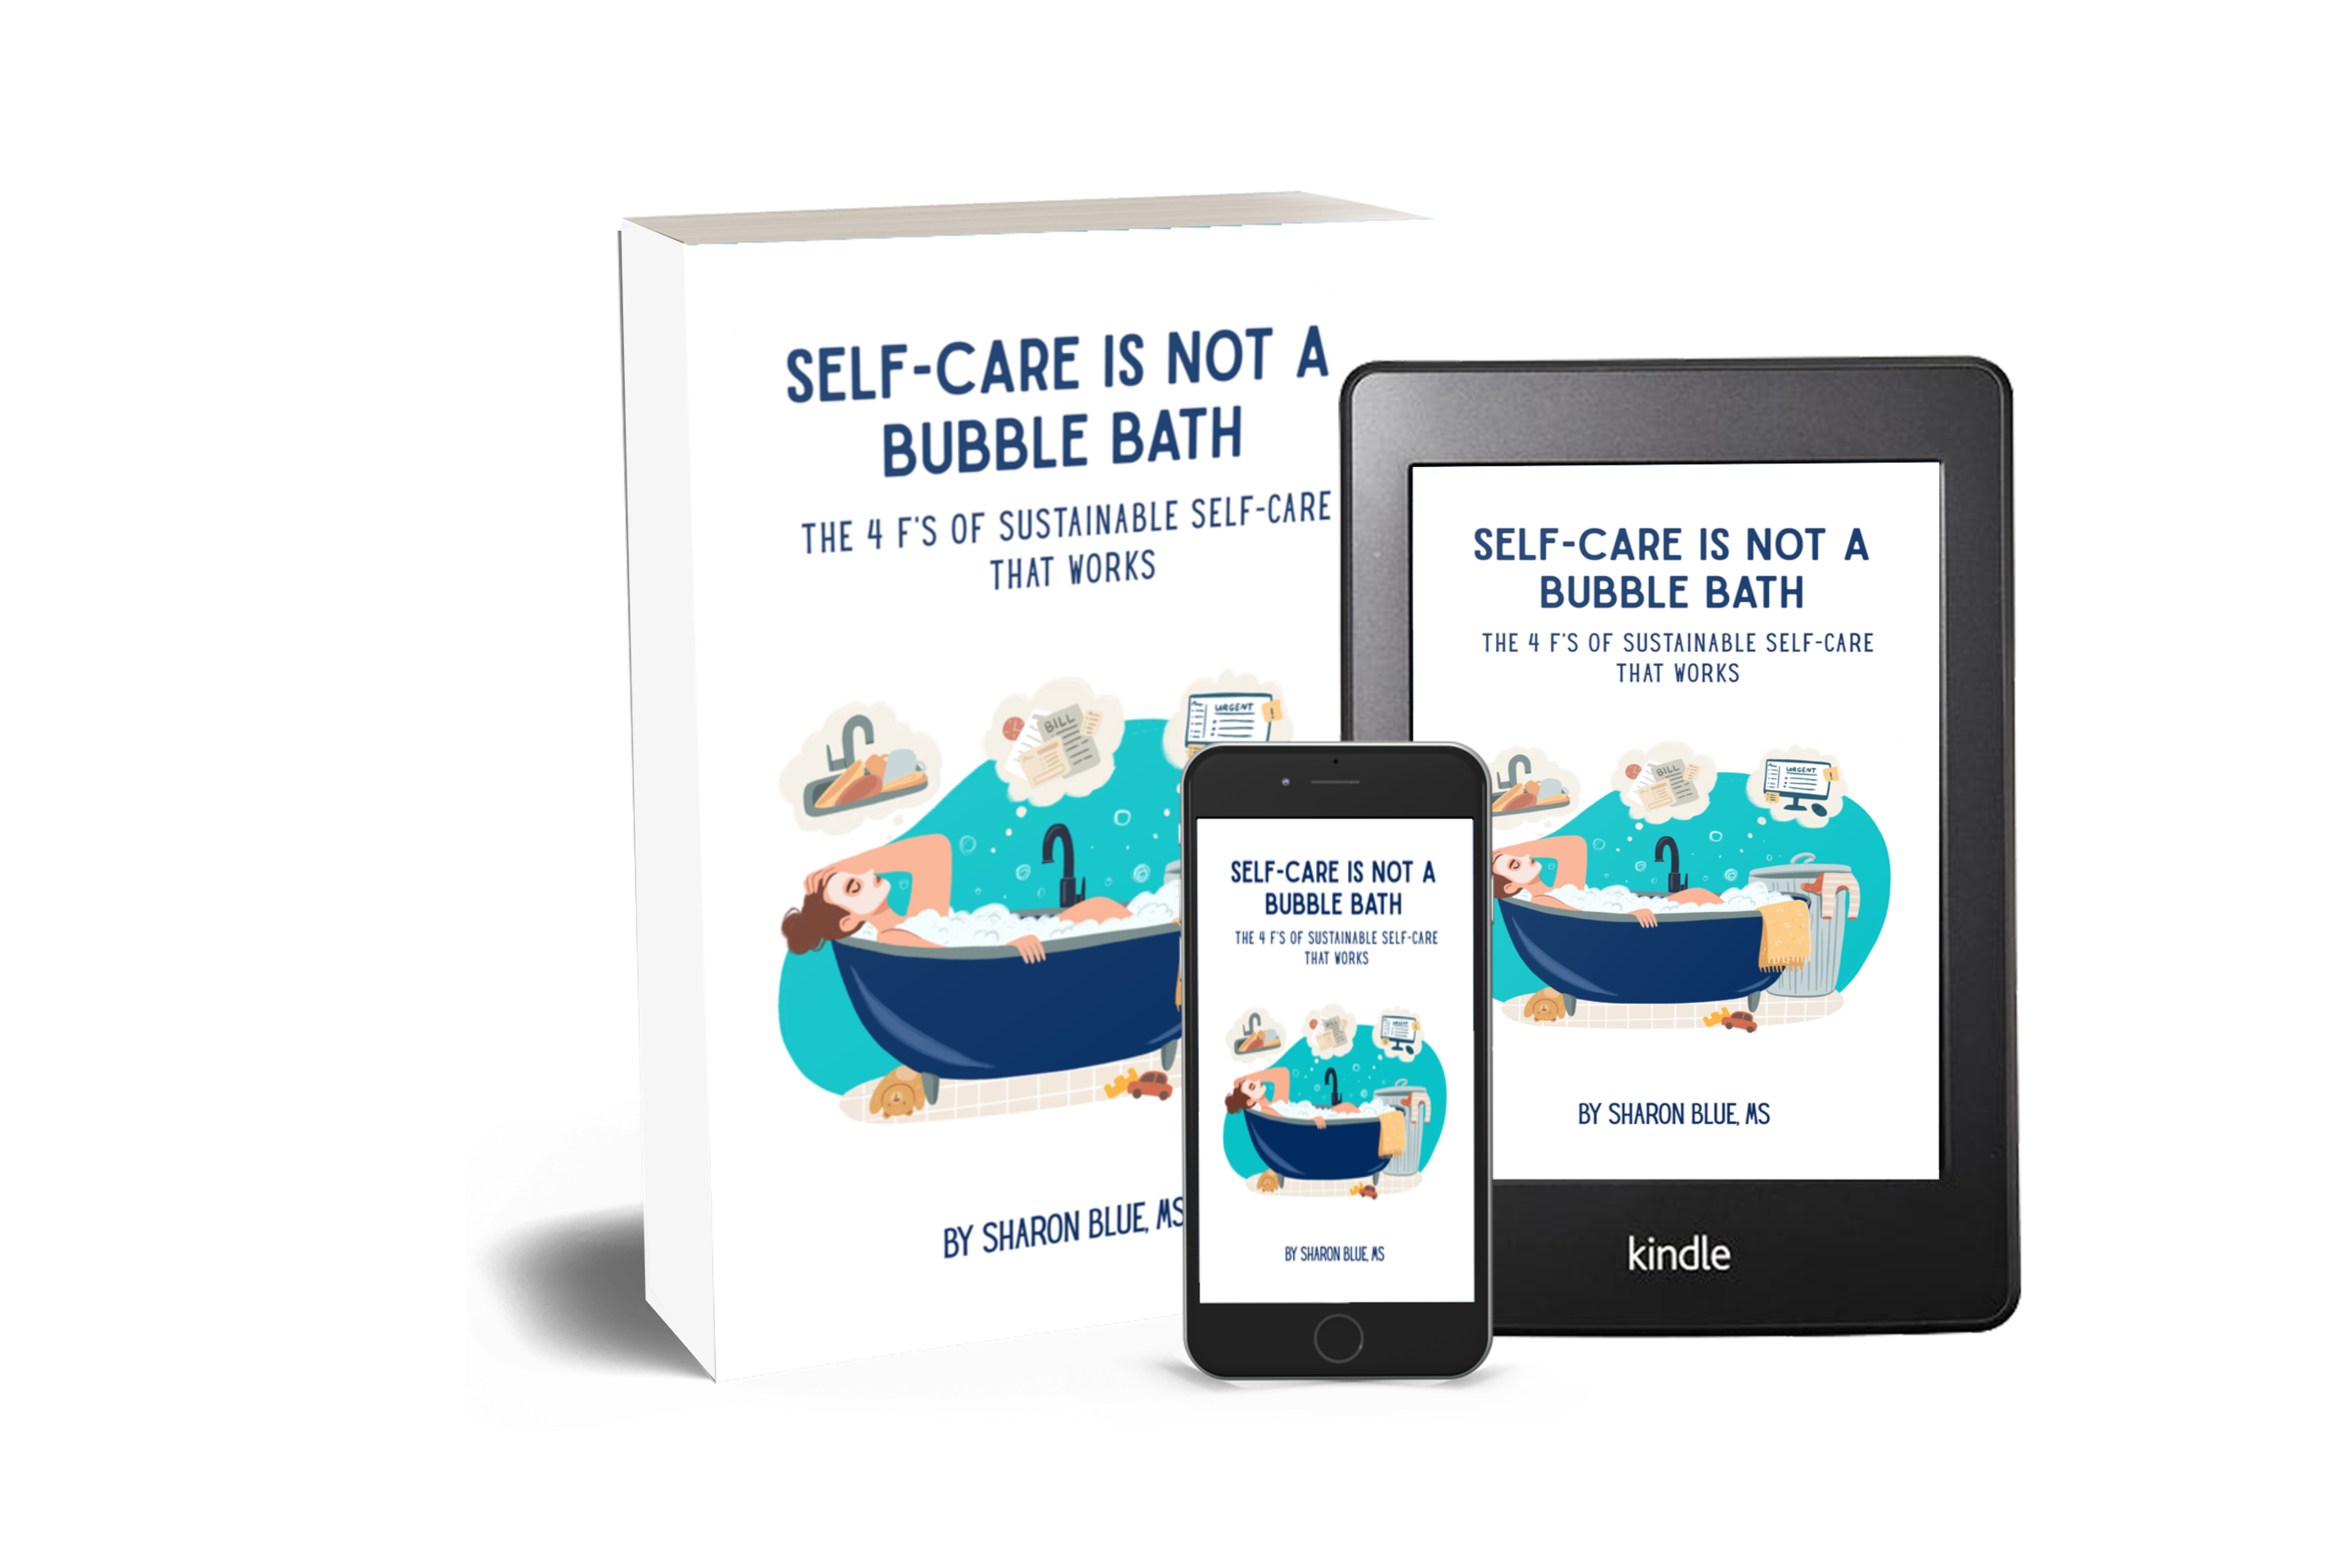 Self-Care is not a bubble bath